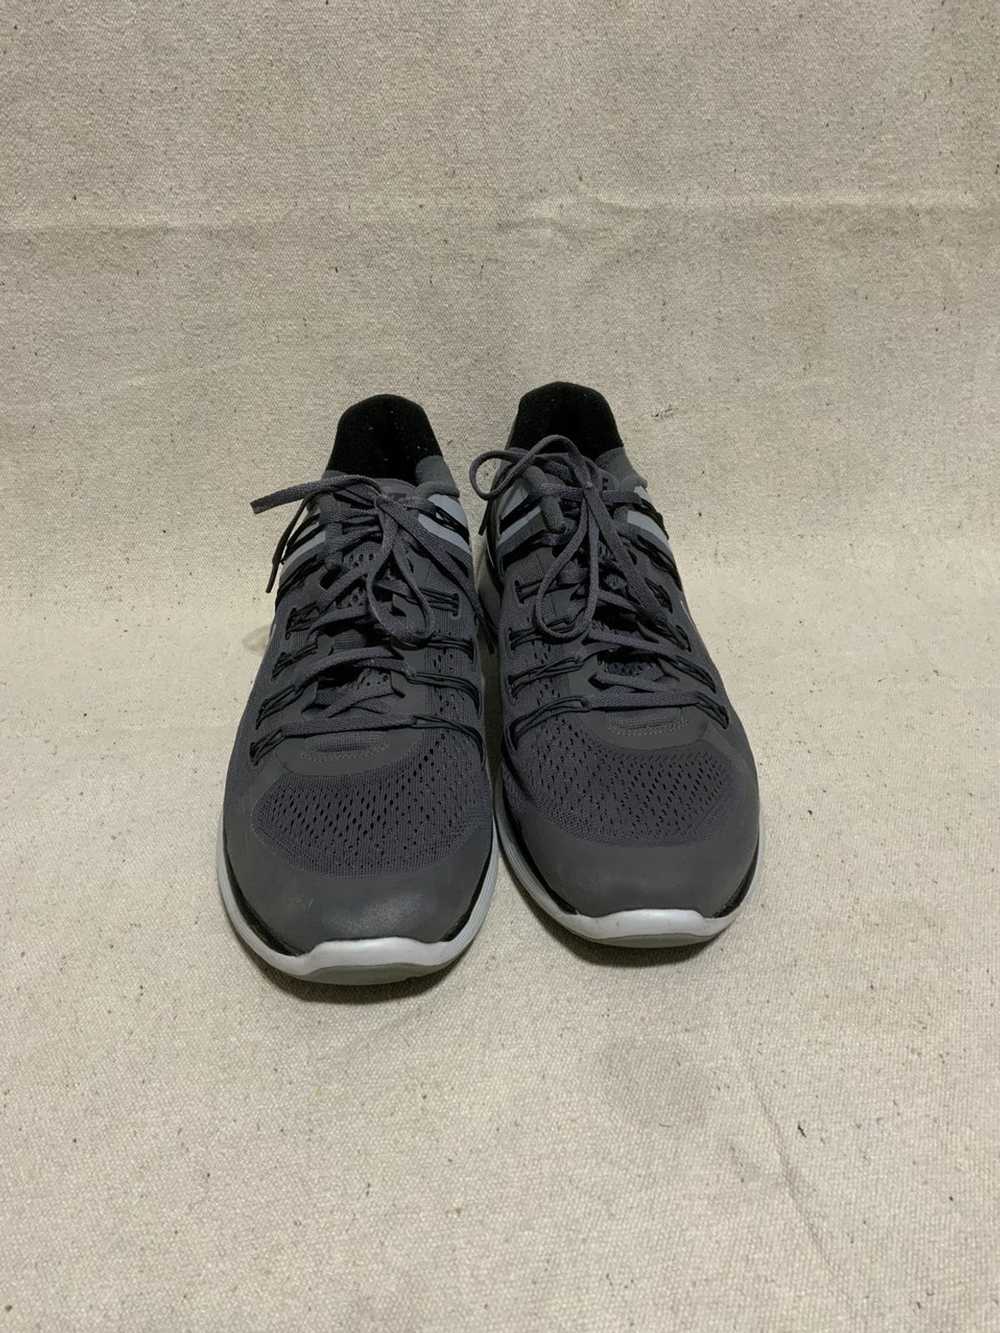 Nike Lunar Eclipse 3 running shoes - image 2